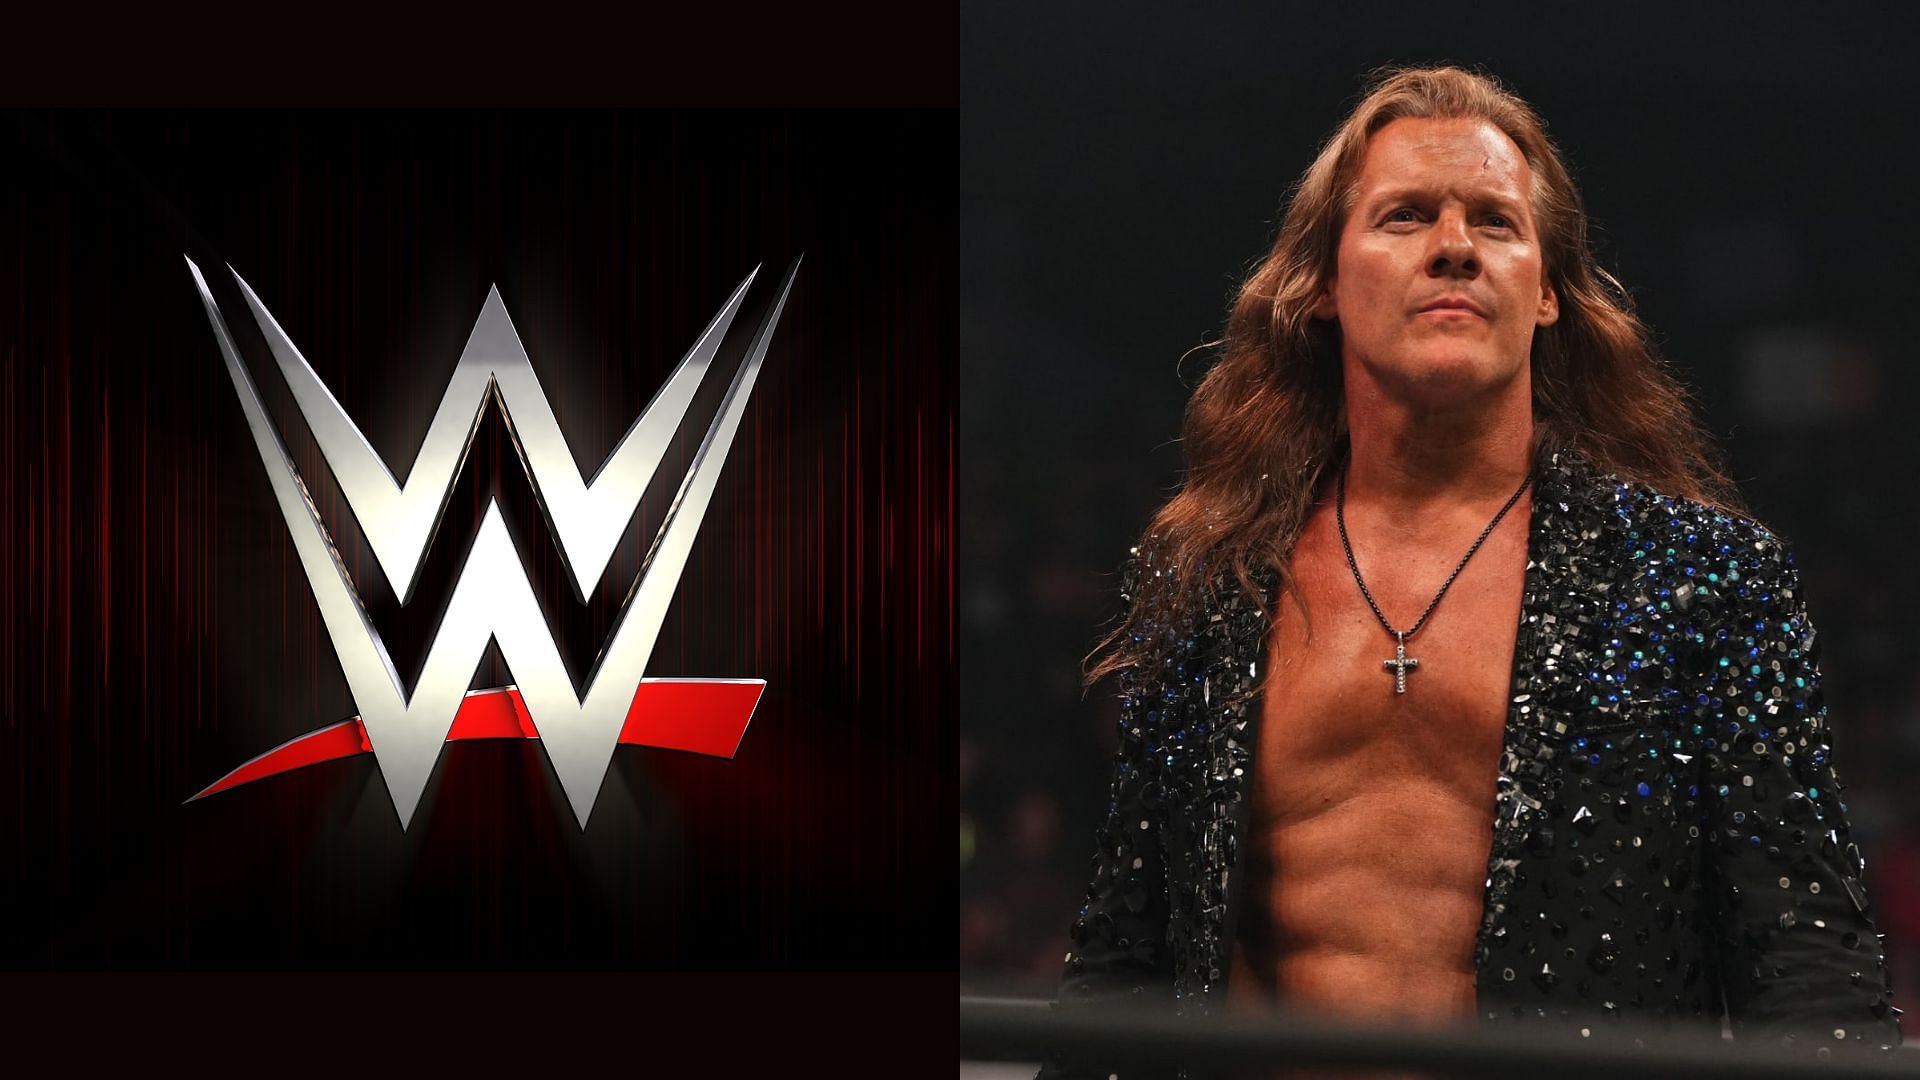 WWE logo (left), Chris Jericho (right)